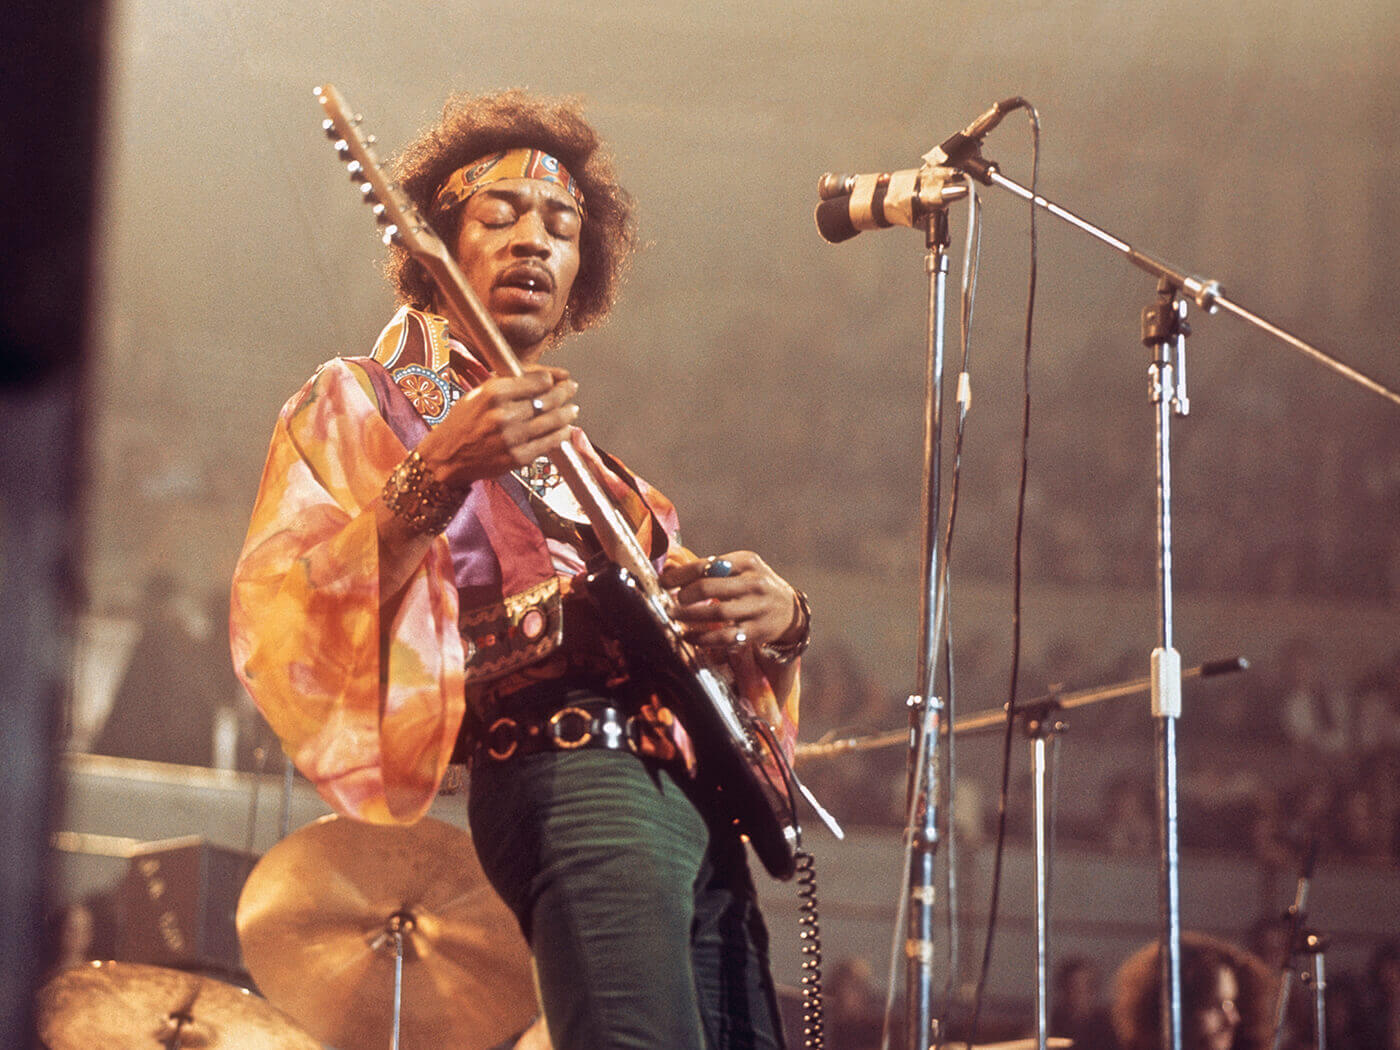 Jimi Hendrix, photo by David Redfern/Redferns via Getty Images